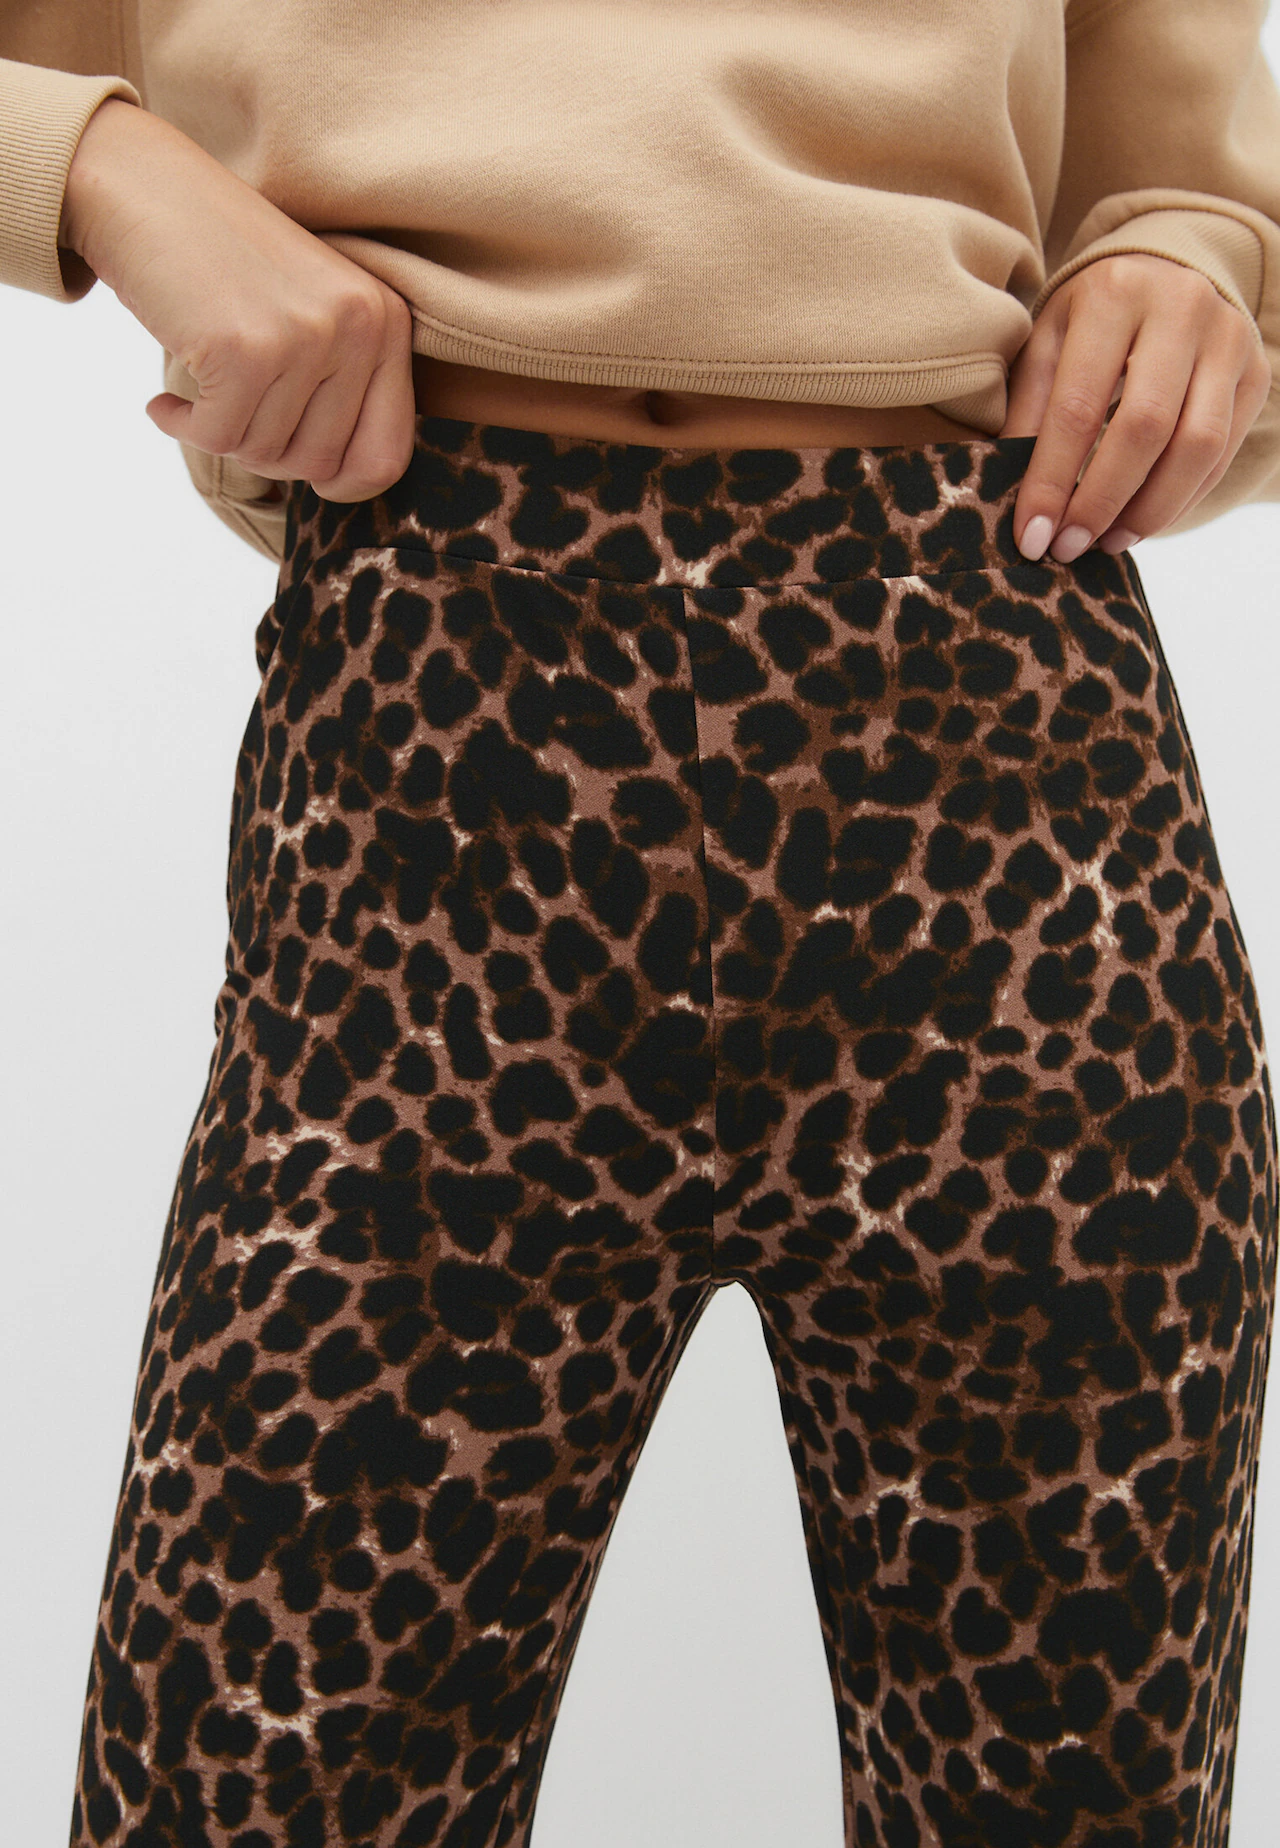 Animal print flared trousers - Women's fashion